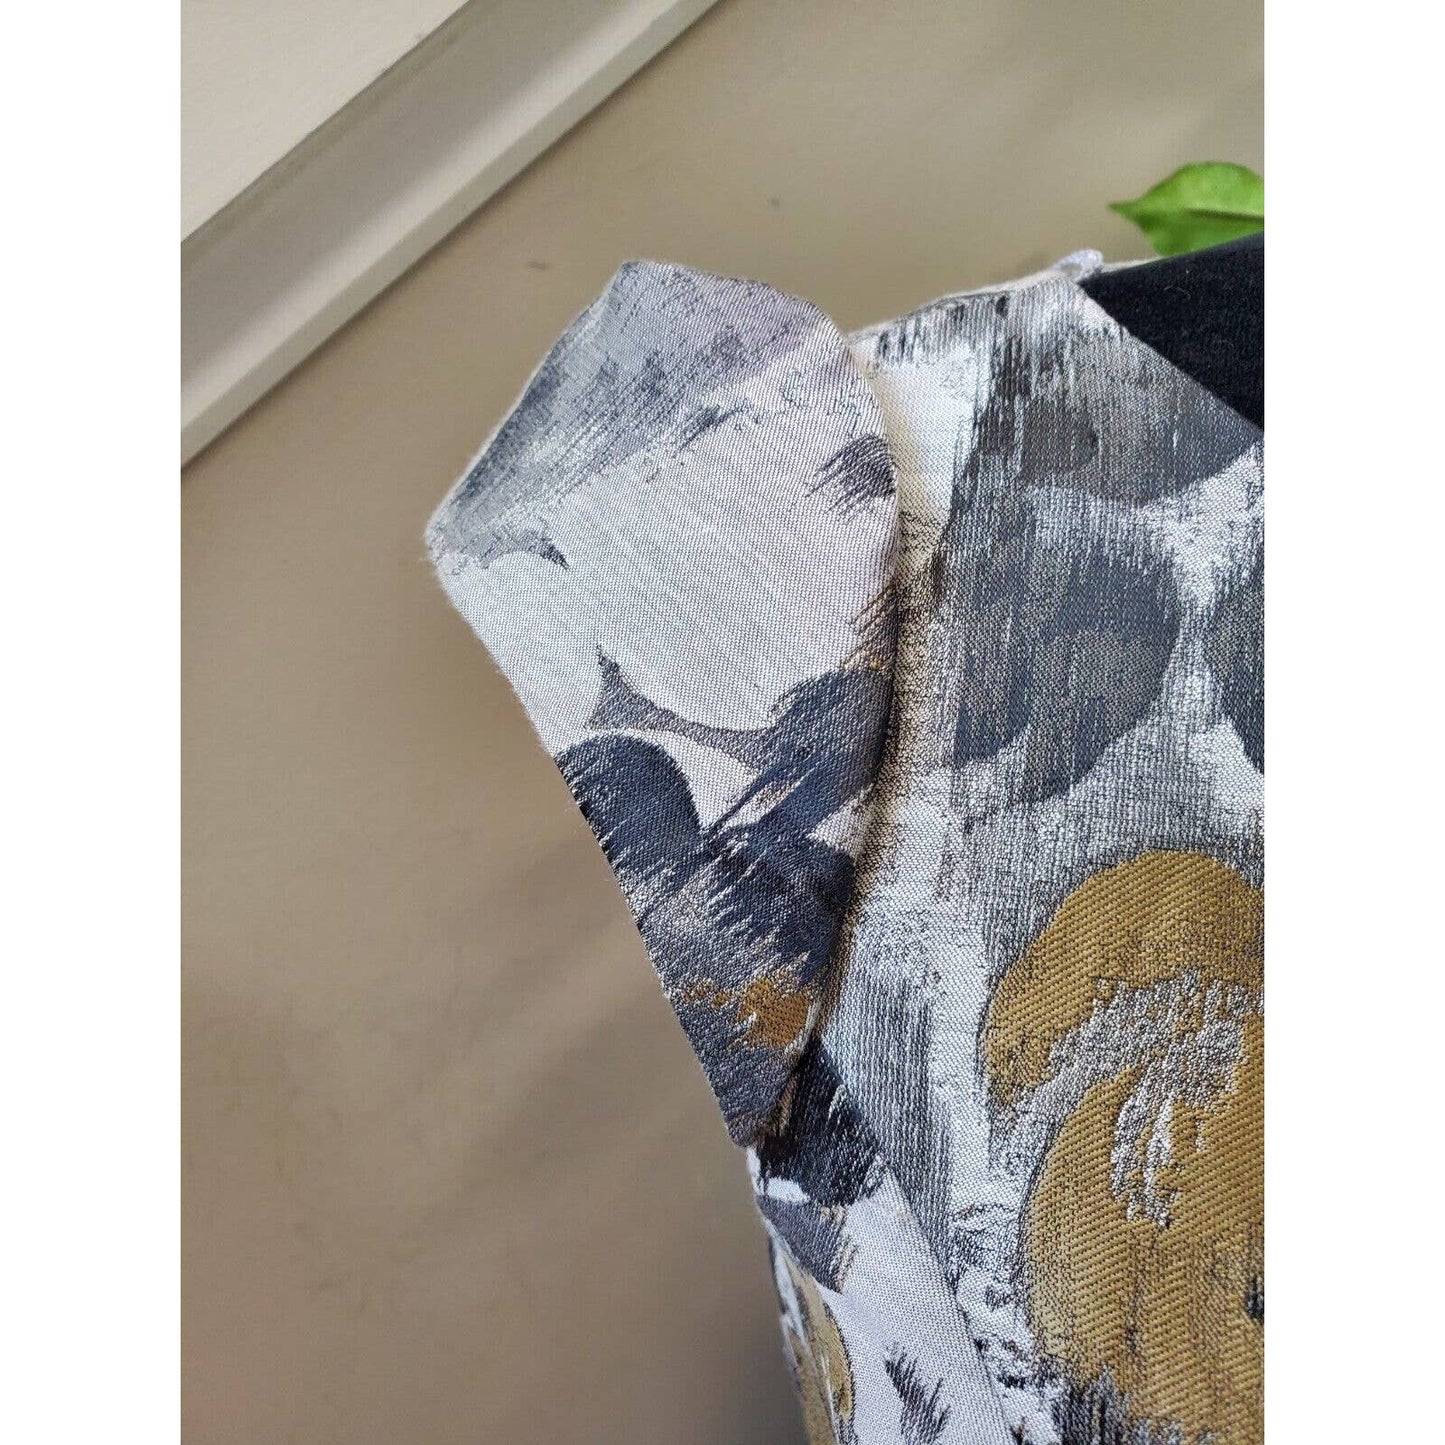 Adrianna Papell Silver Gray Abstract Print Peplum Sheath Dress Size 4